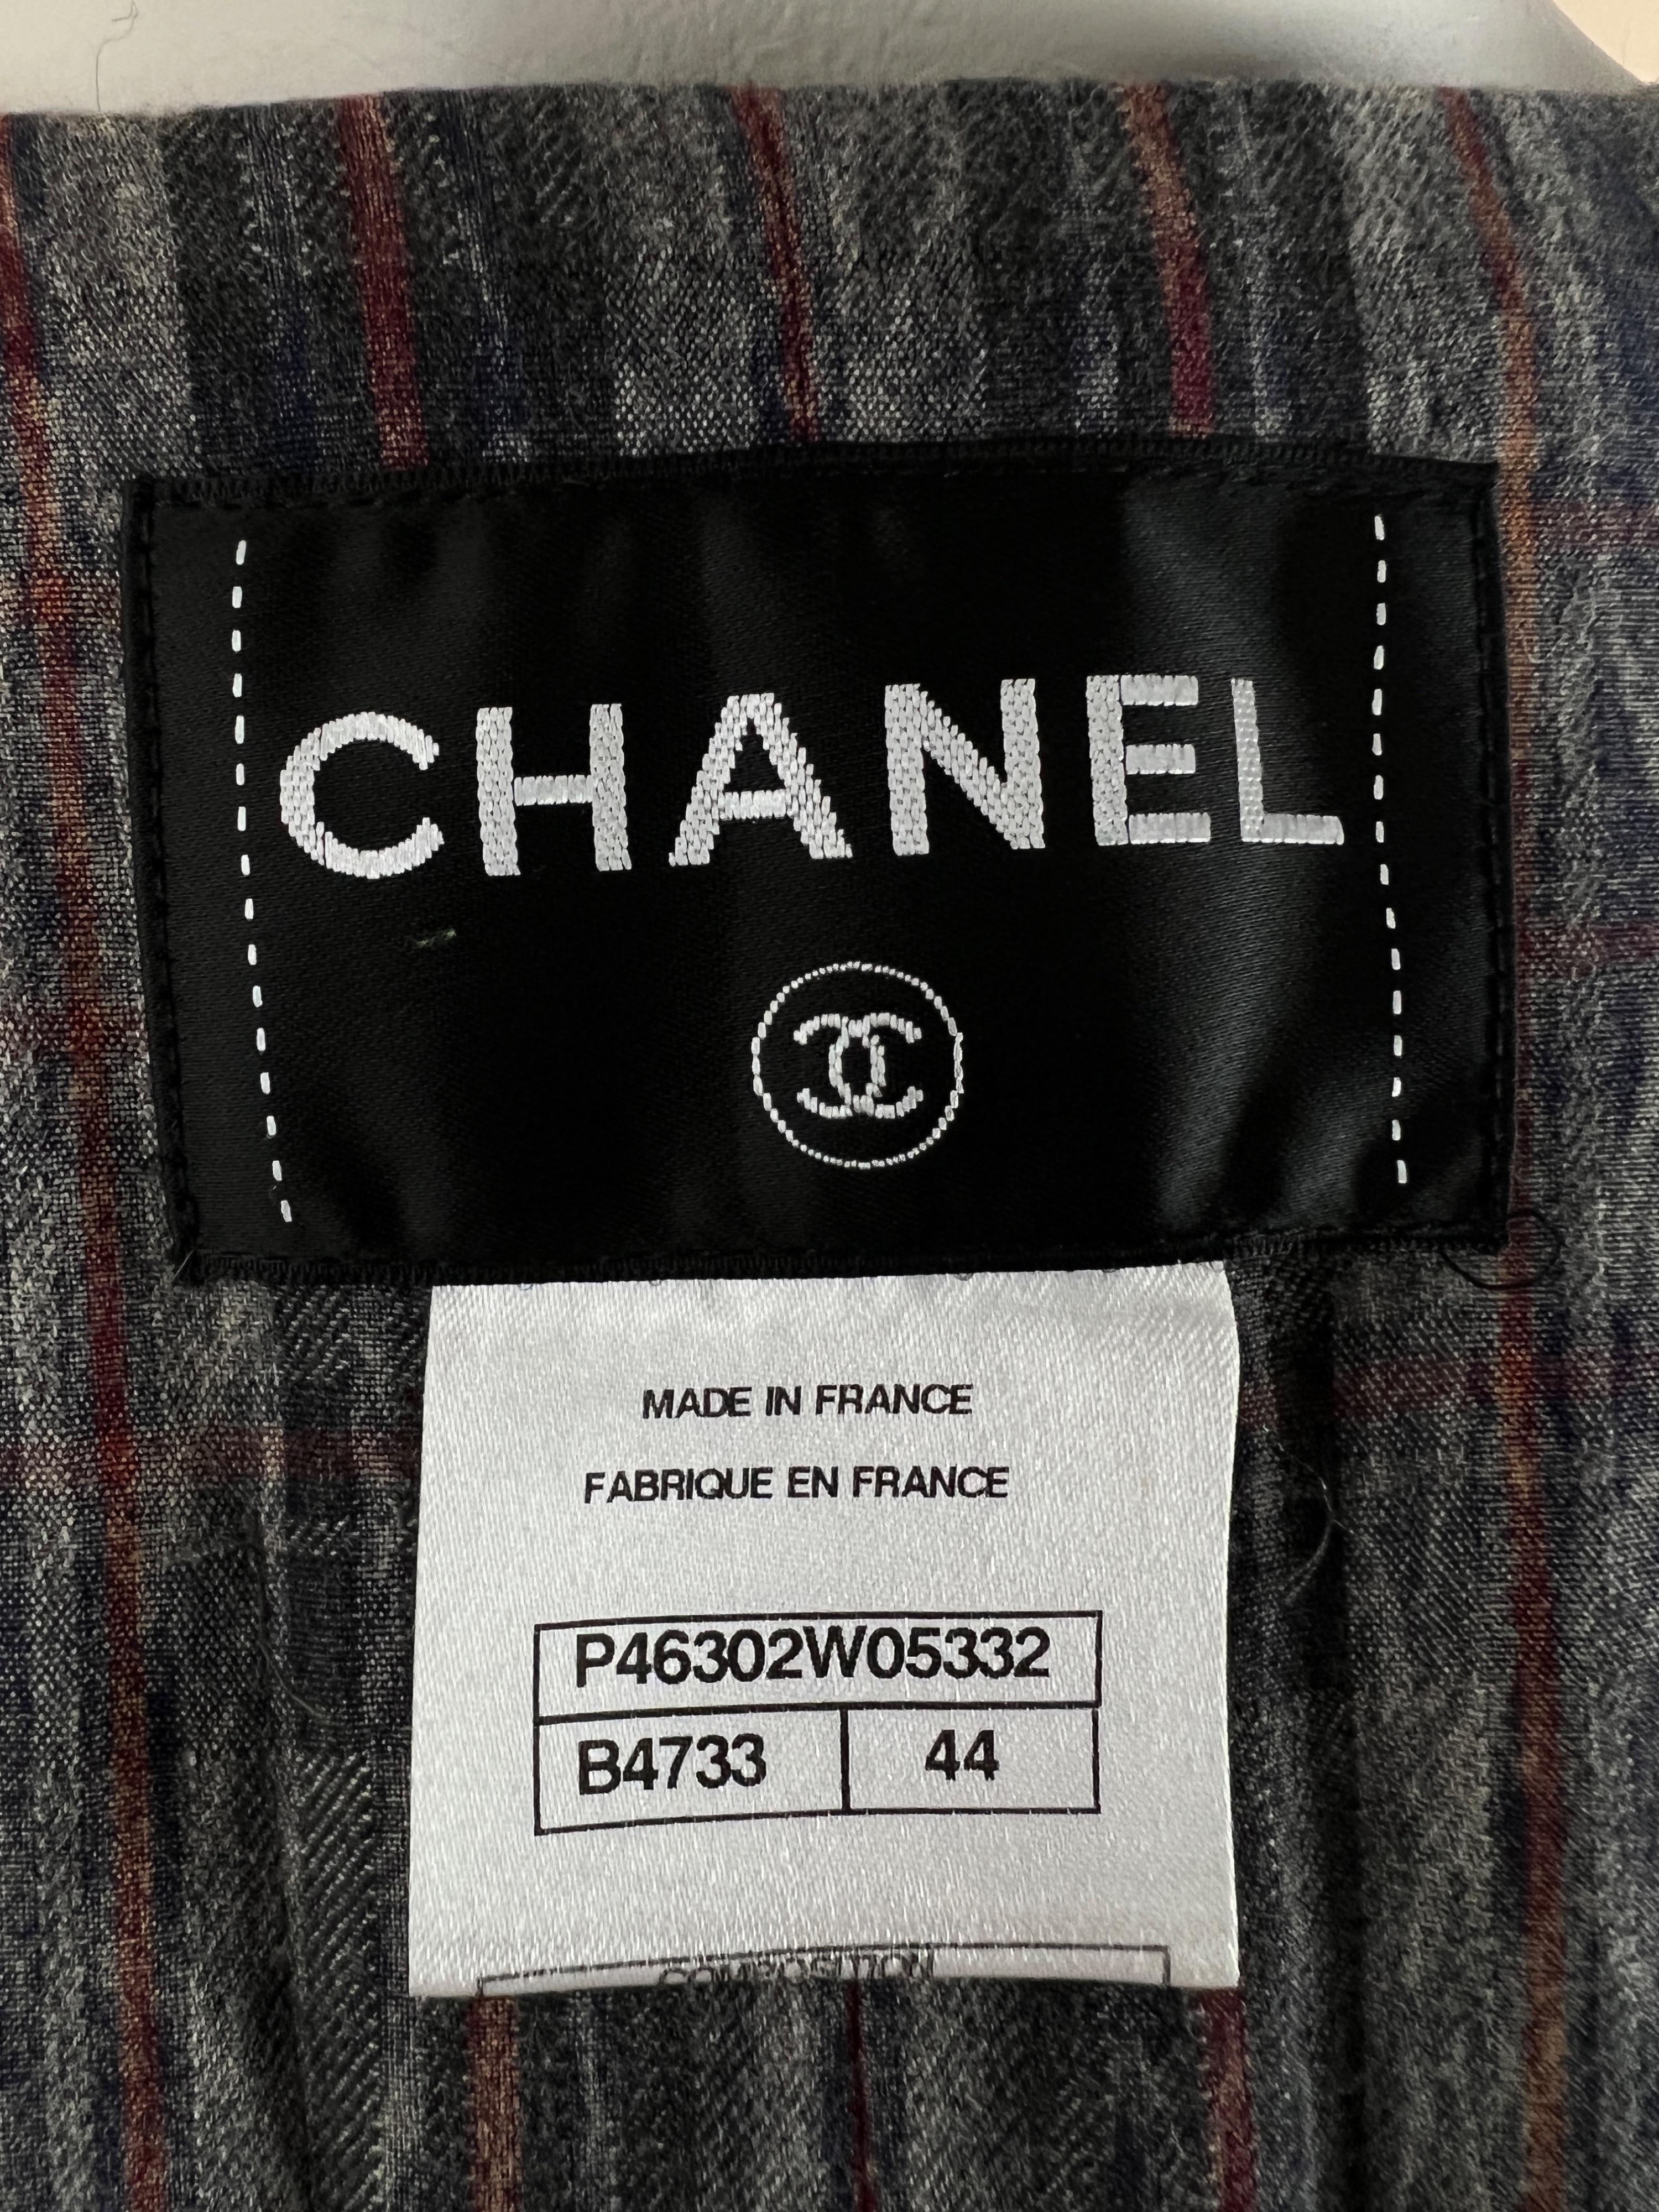 Chanel Edinburgh Collection Gripoix Buttons Tweed Jacket 10